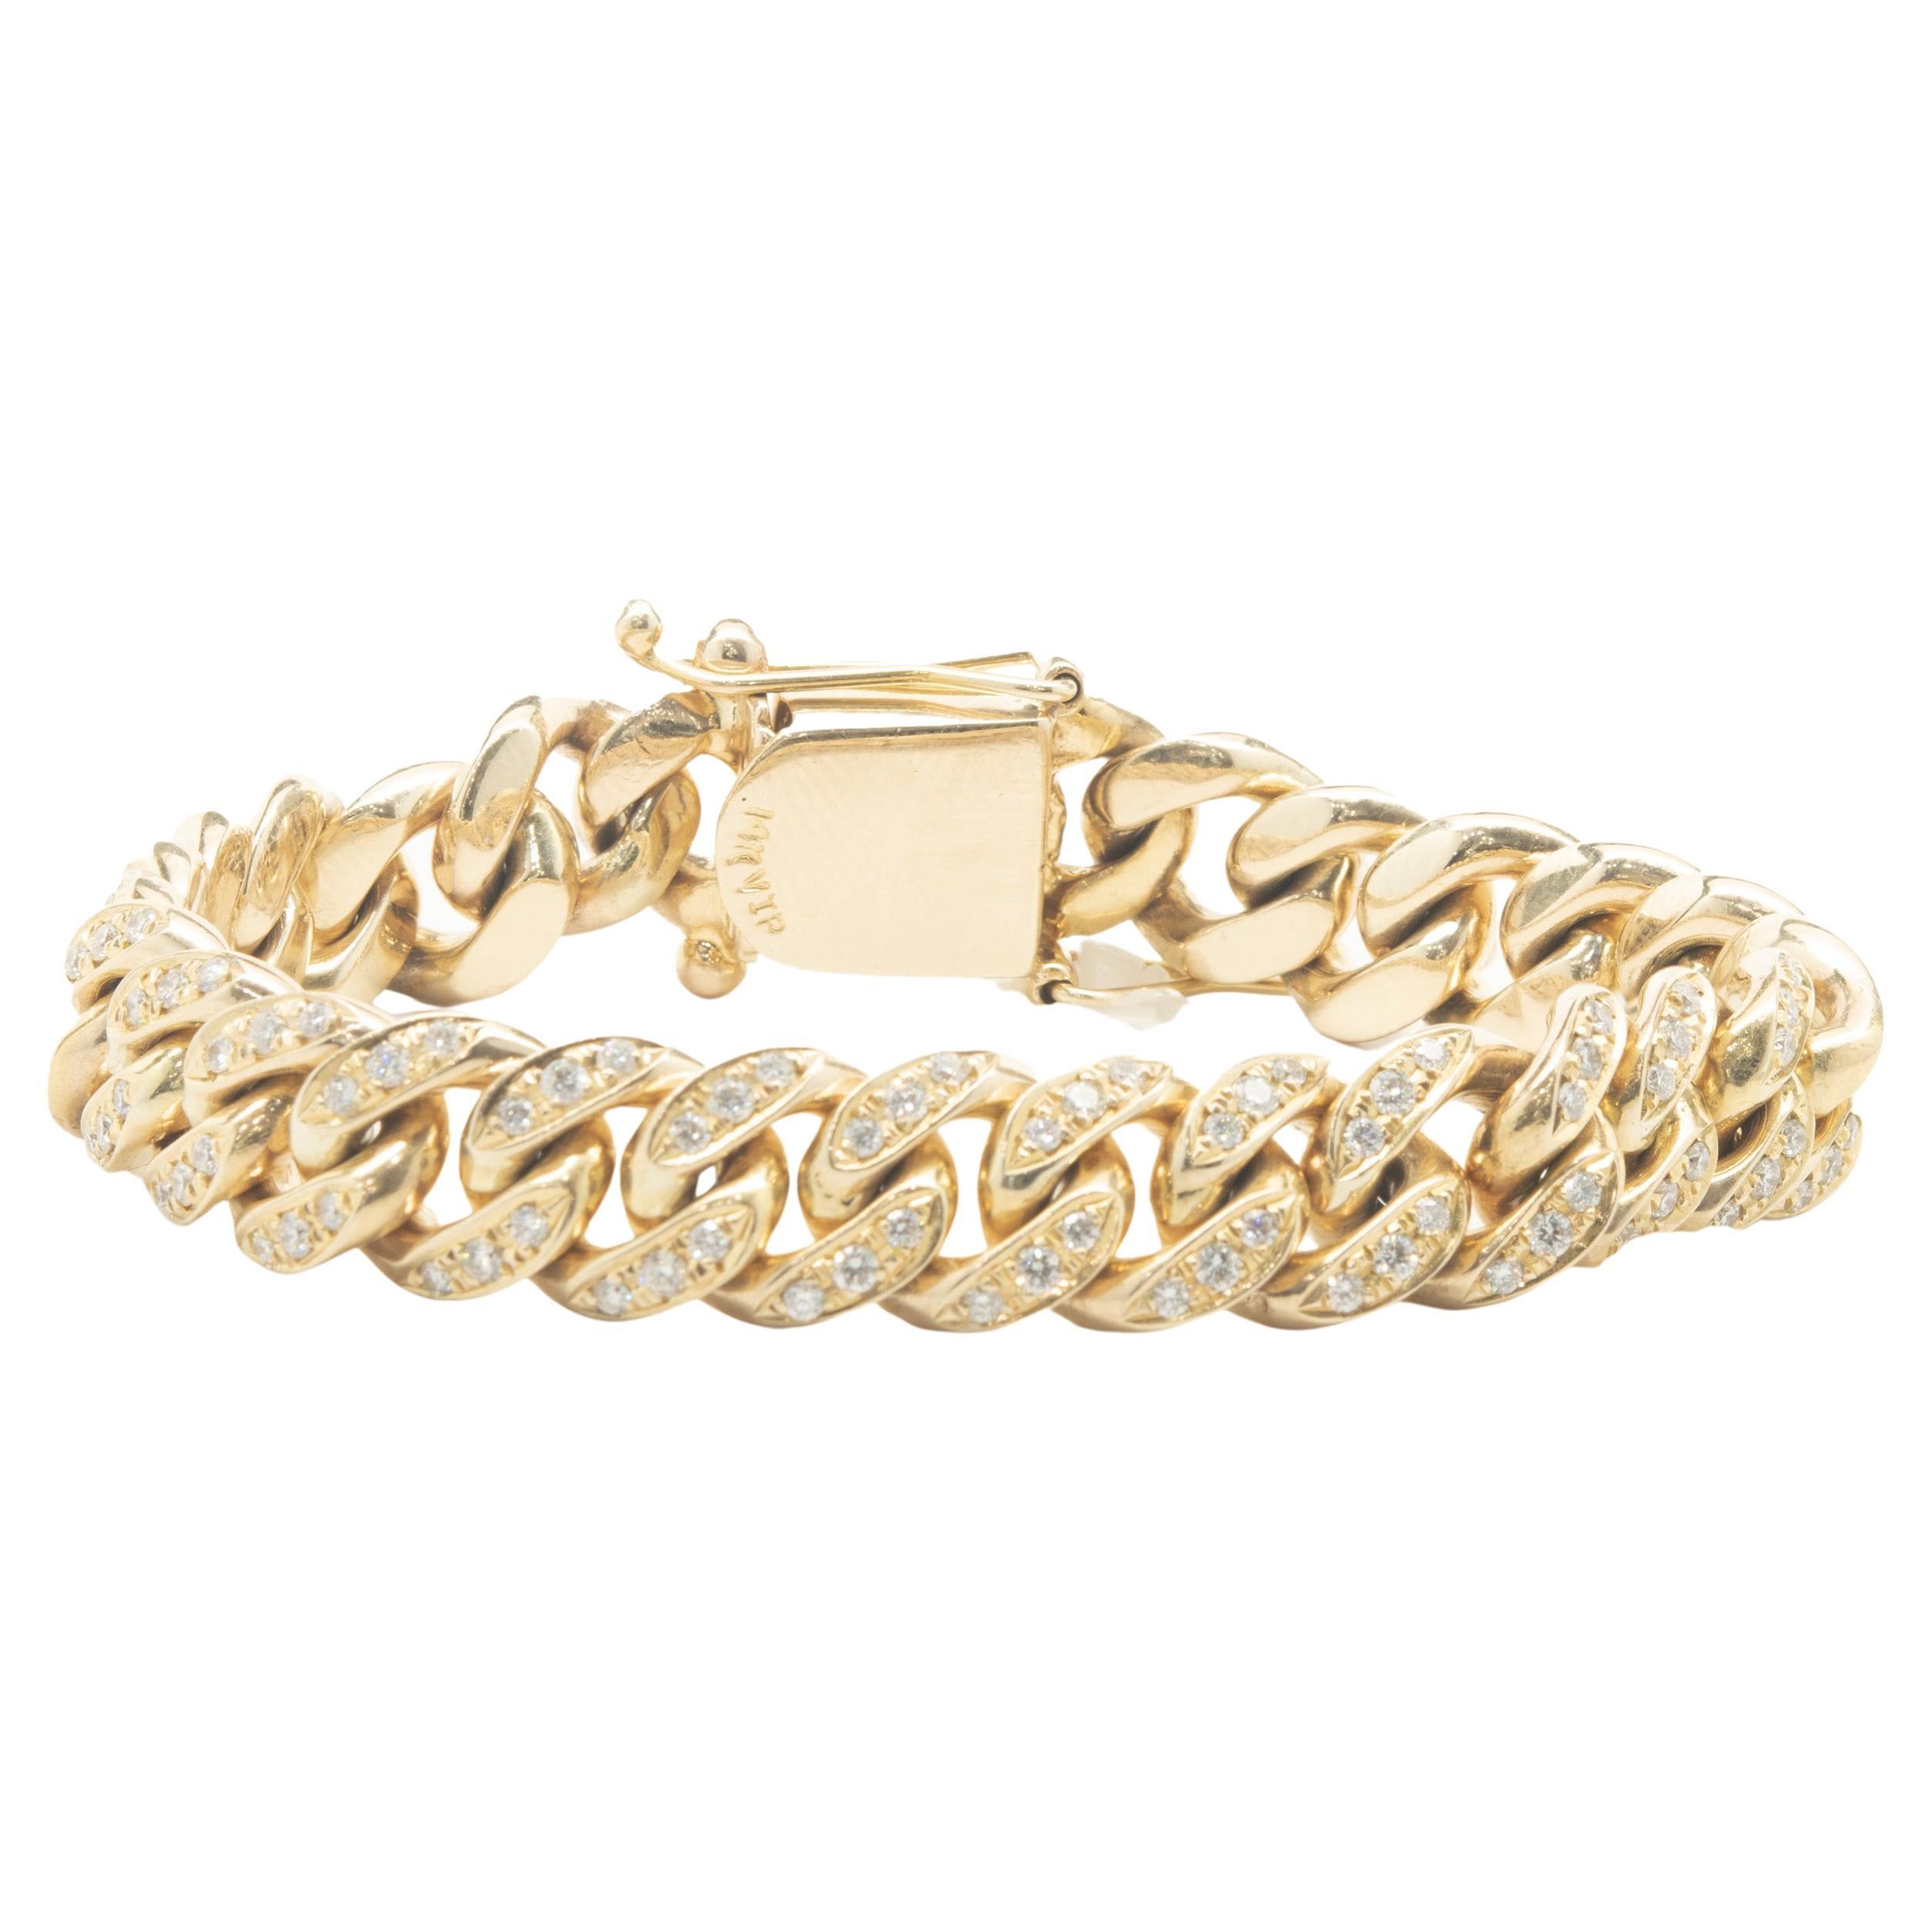 14 Karat Yellow Gold Diamond Cuban Link Bracelet